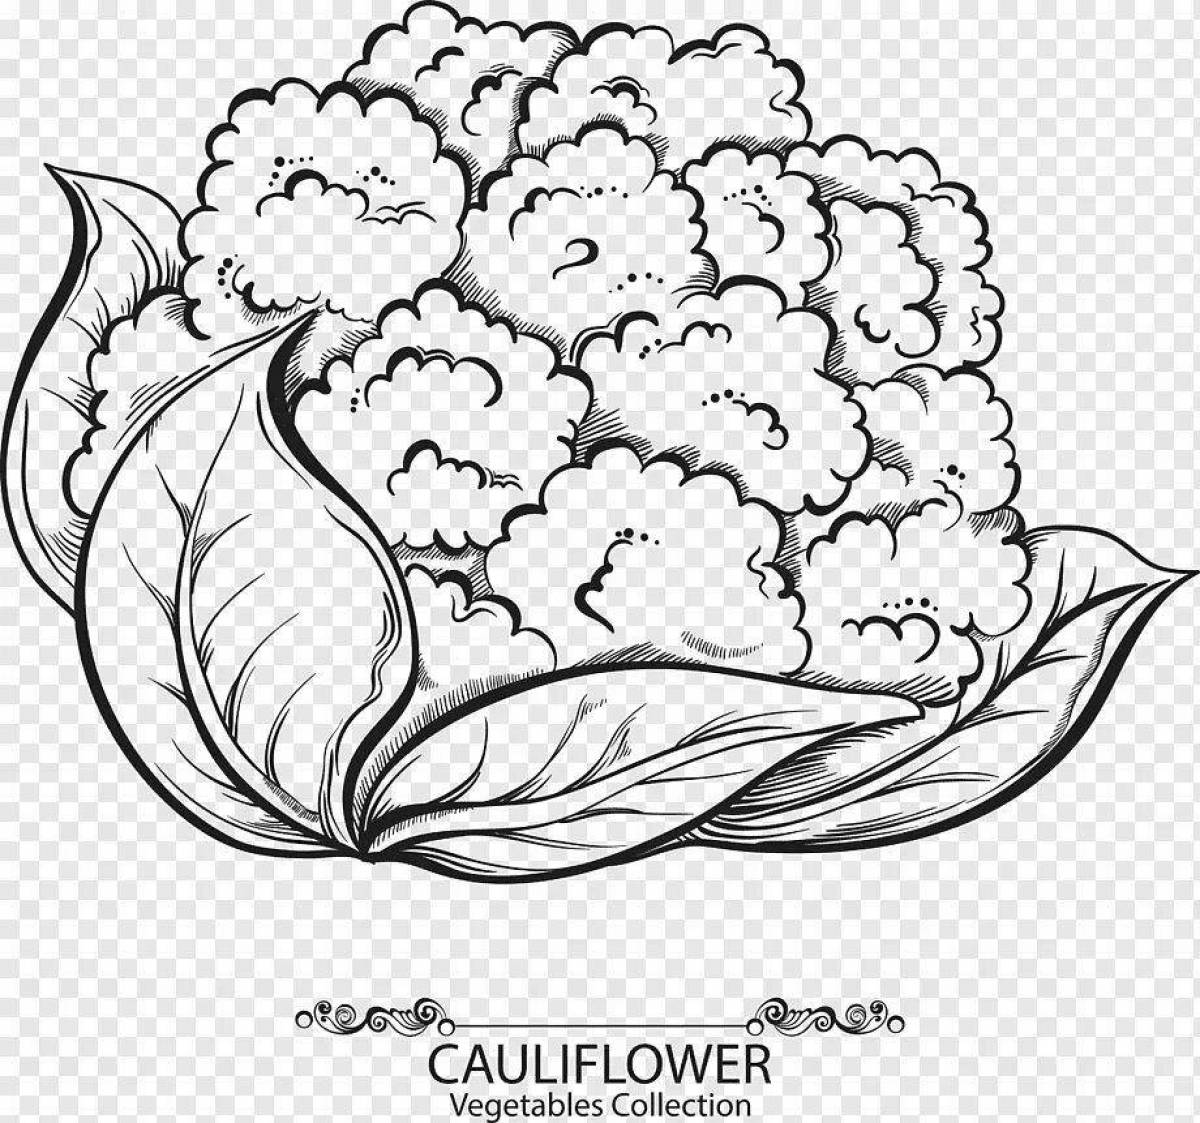 Coloring dreamy cauliflower